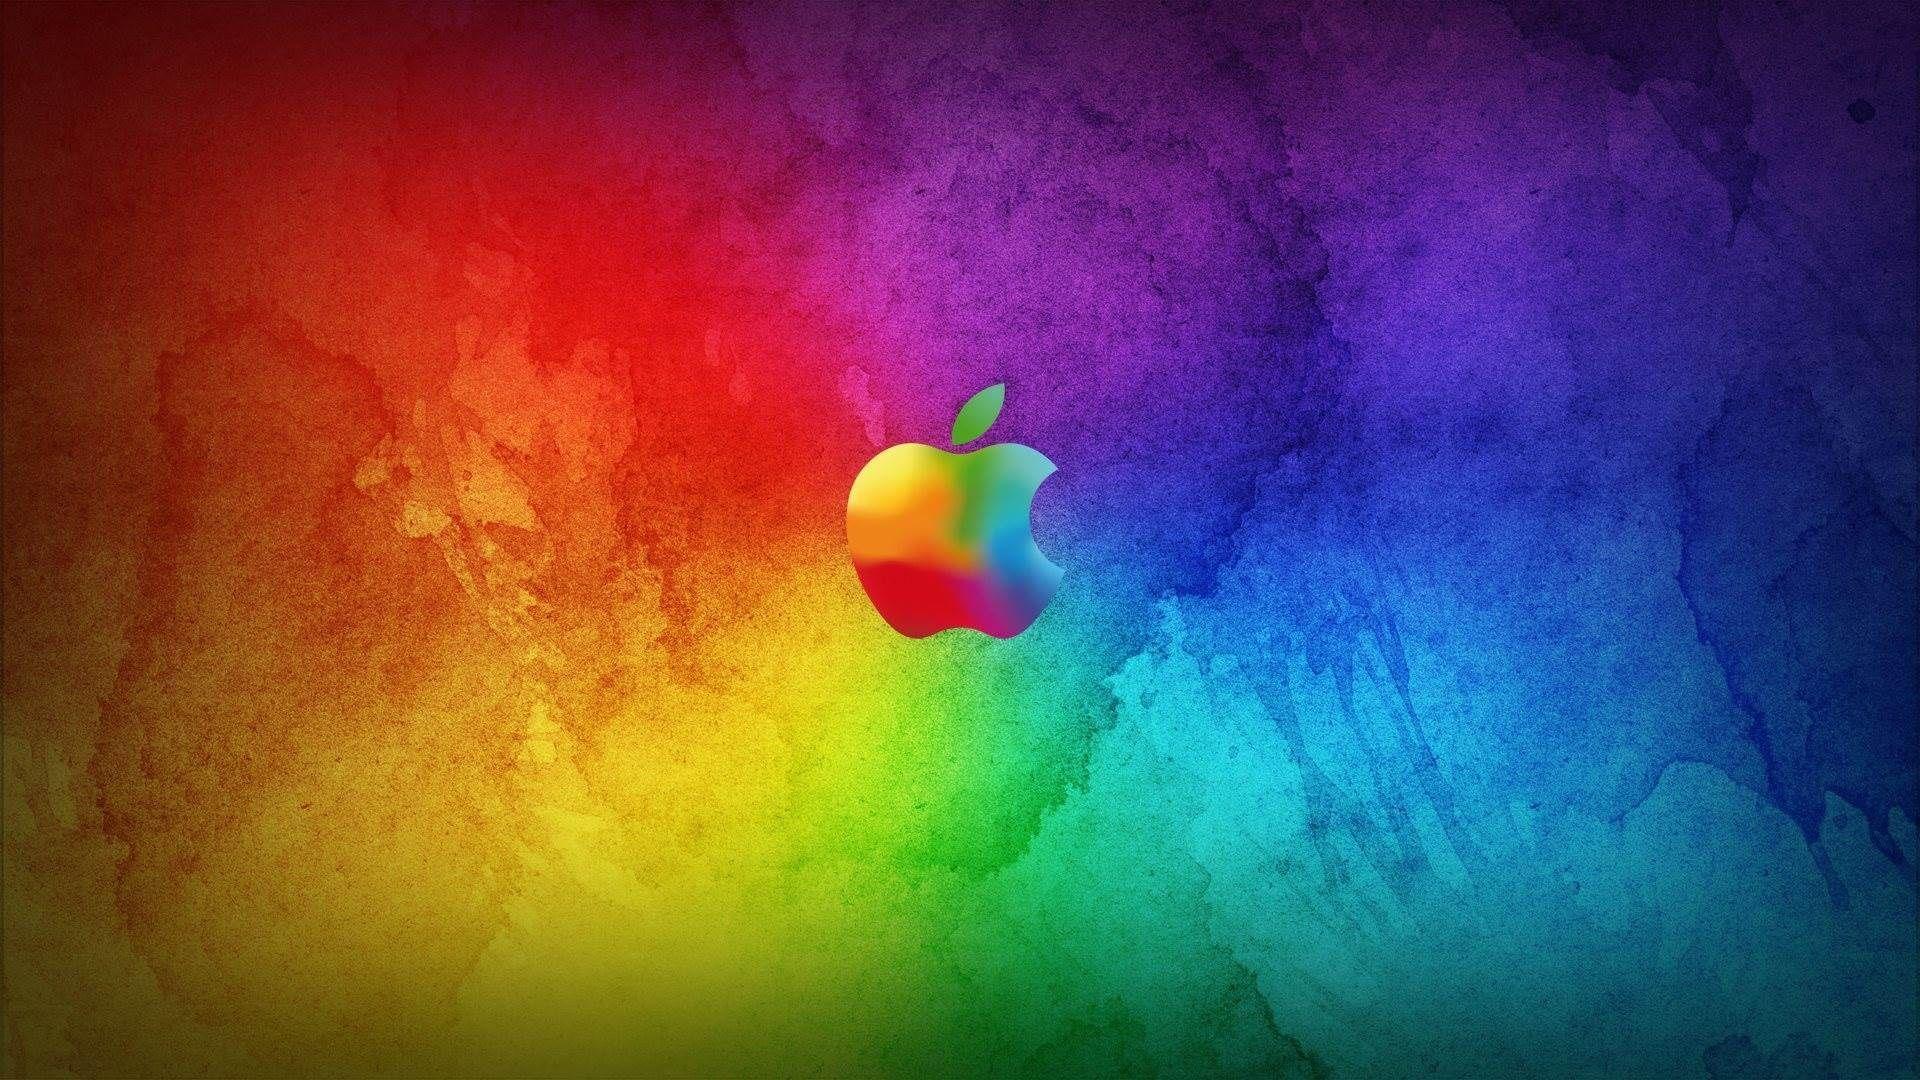 Retro Apple Logo WWDC wallpaper 2560×1440 Apple. Adorable